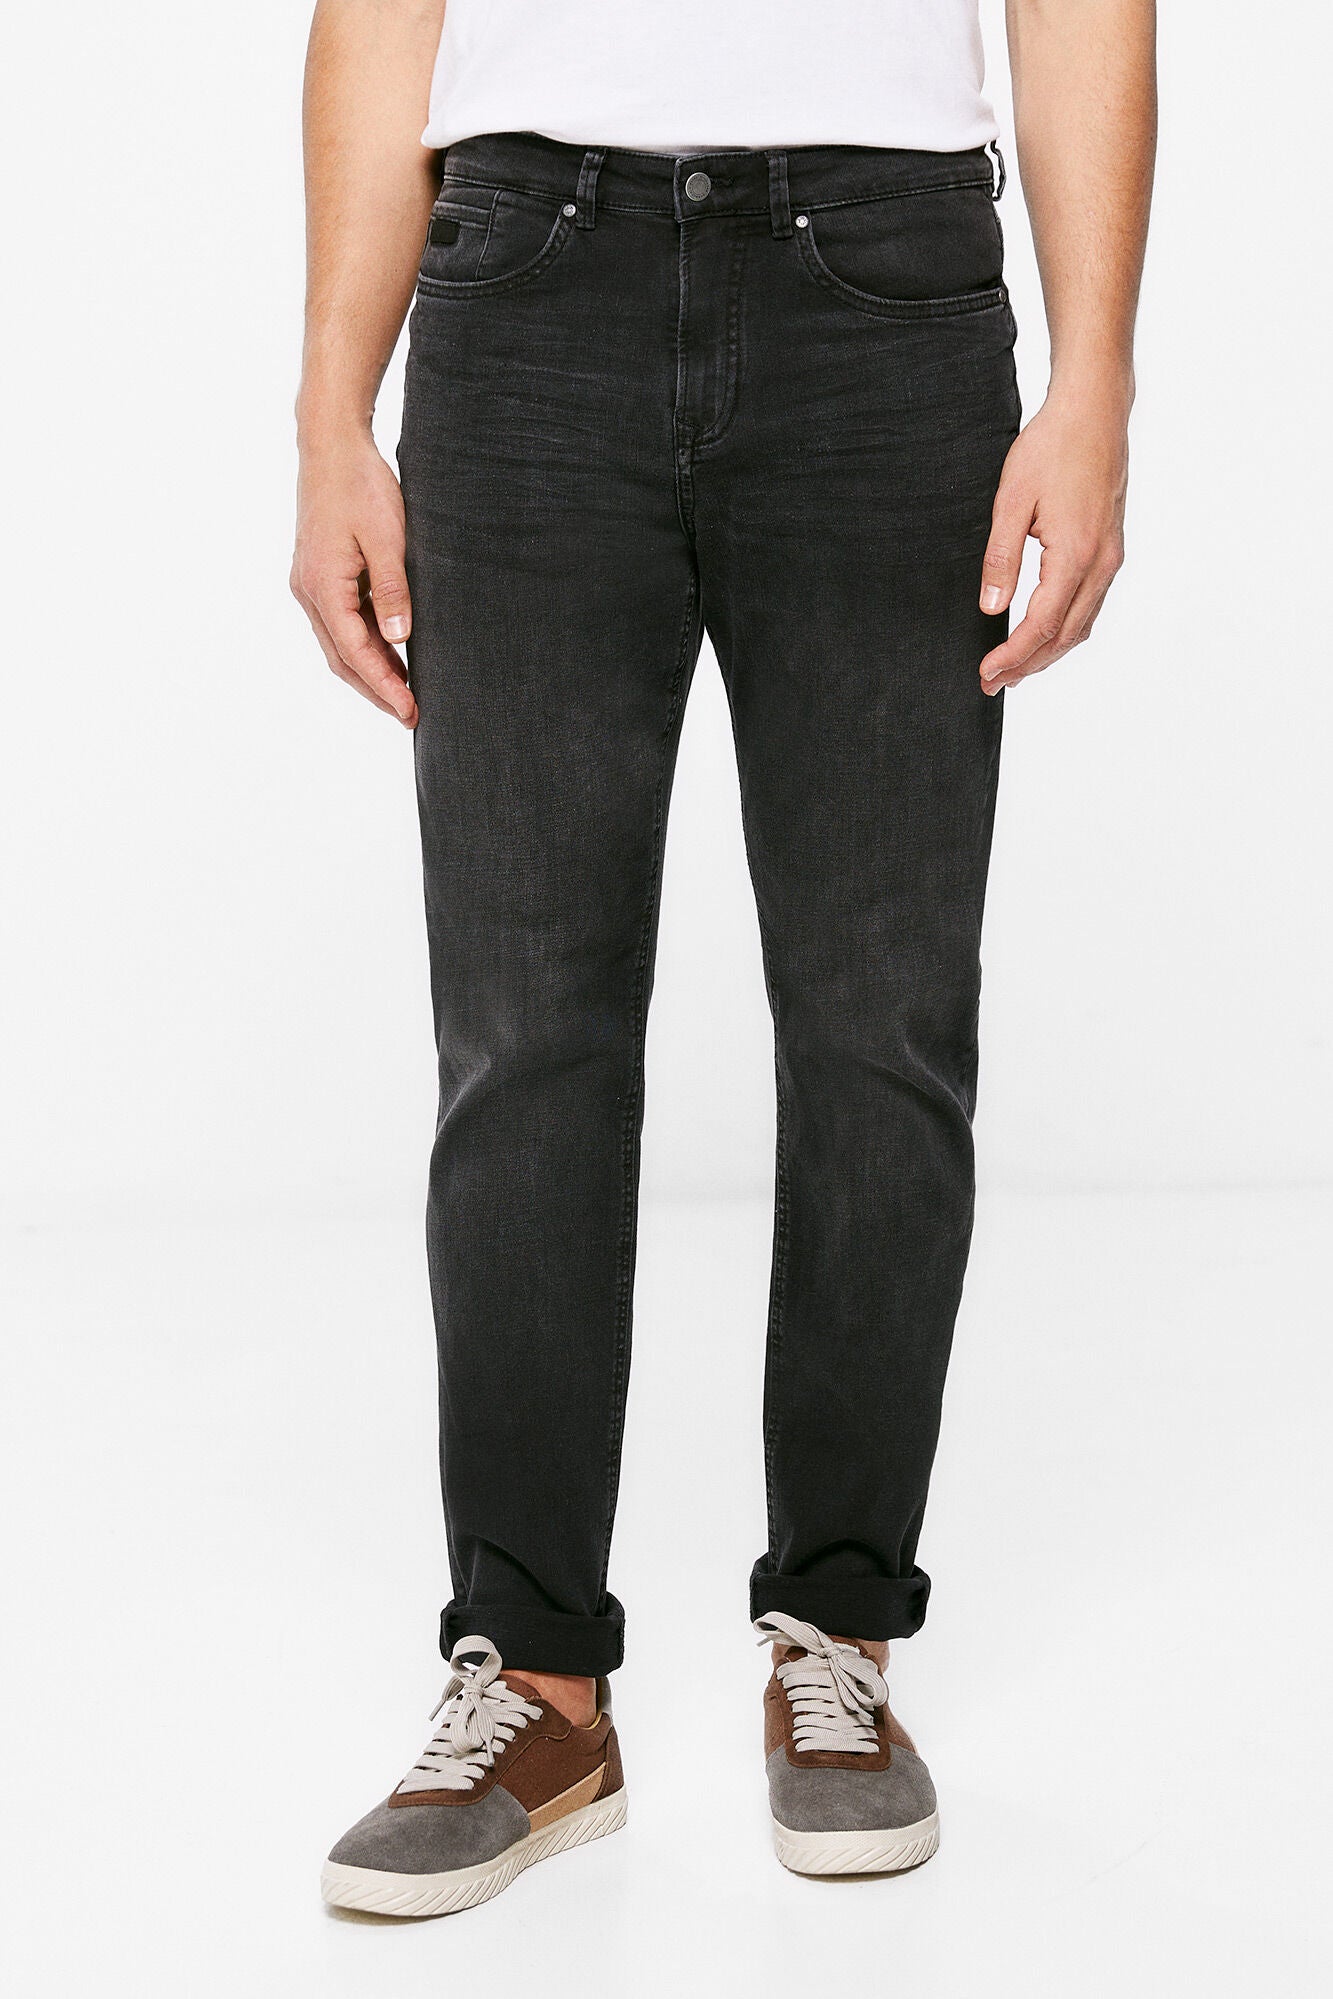 Washed black slim fit ultra-lightweight jeans